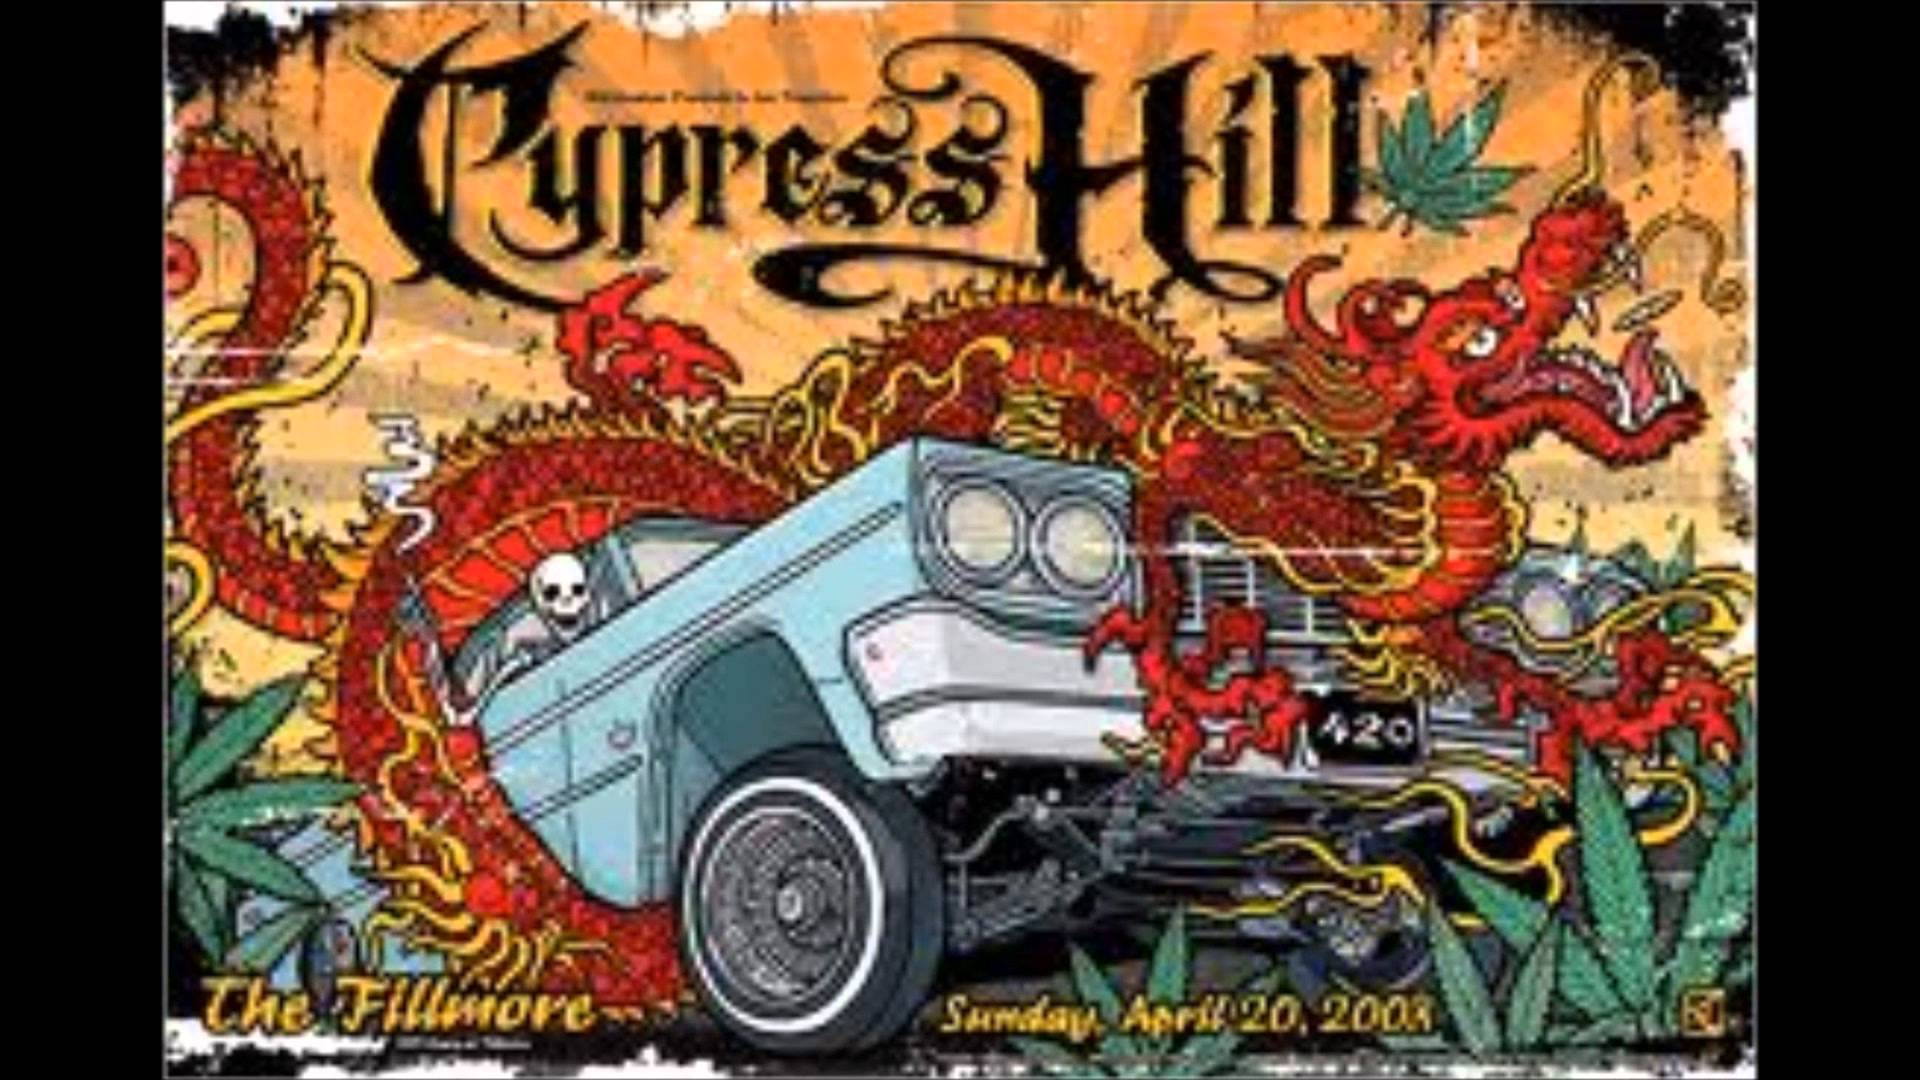 CypressHill w33daddict BReal DjMugg EricBB SenDog  Cypress hill  Music poster design Hill logo